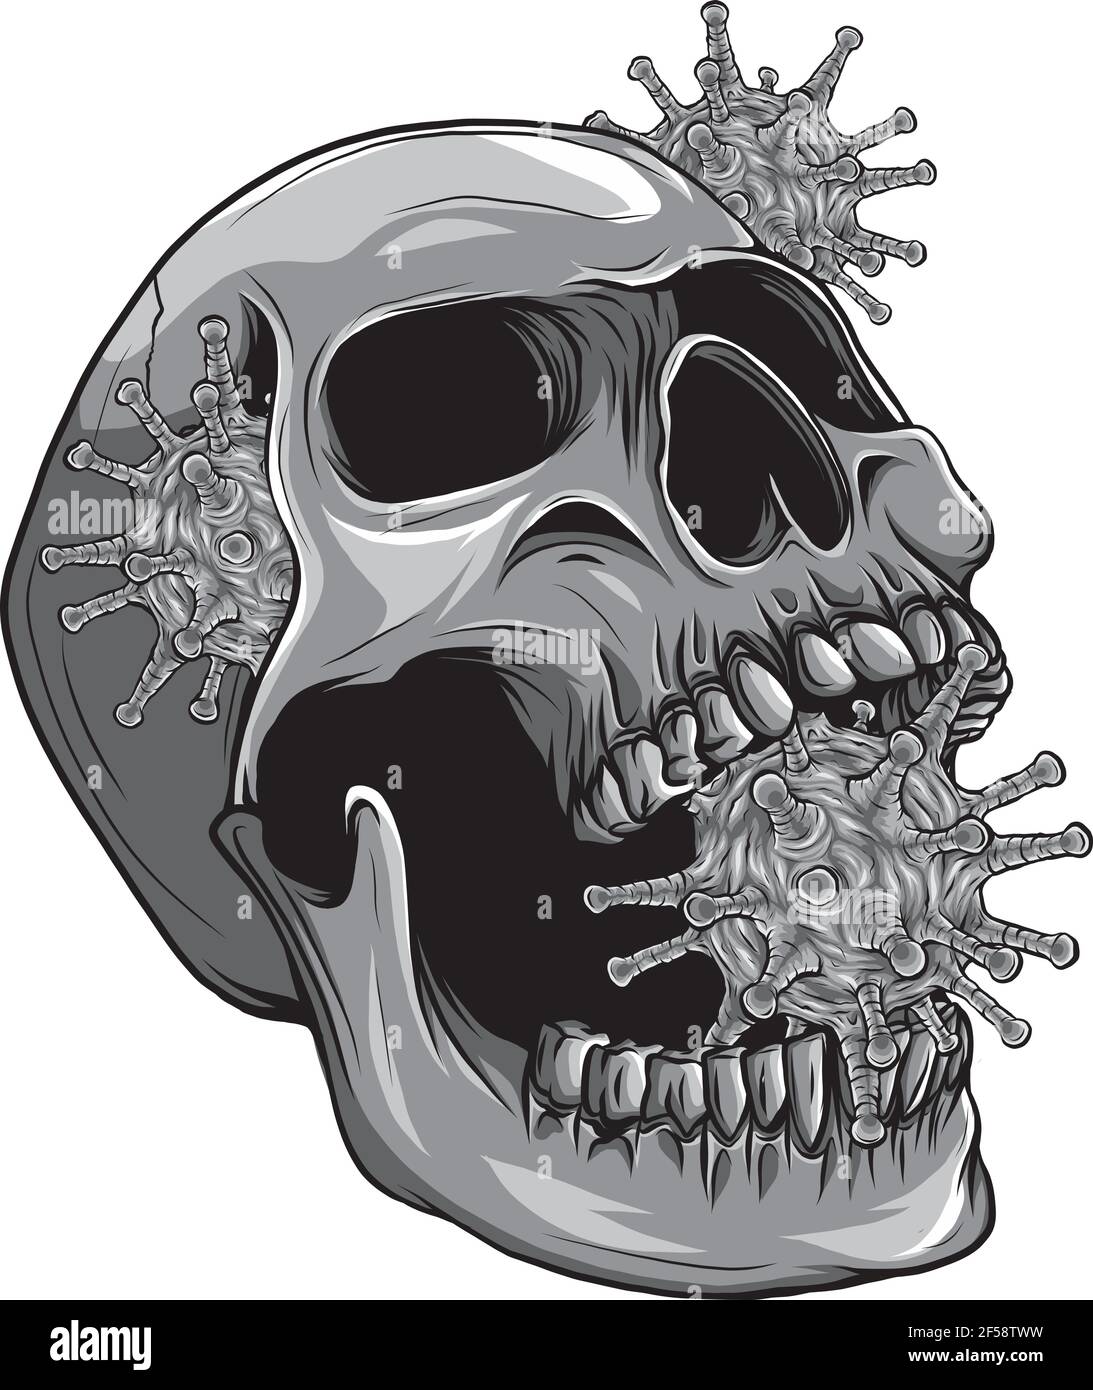 design of human skull with virus vector illustration Stock Vector